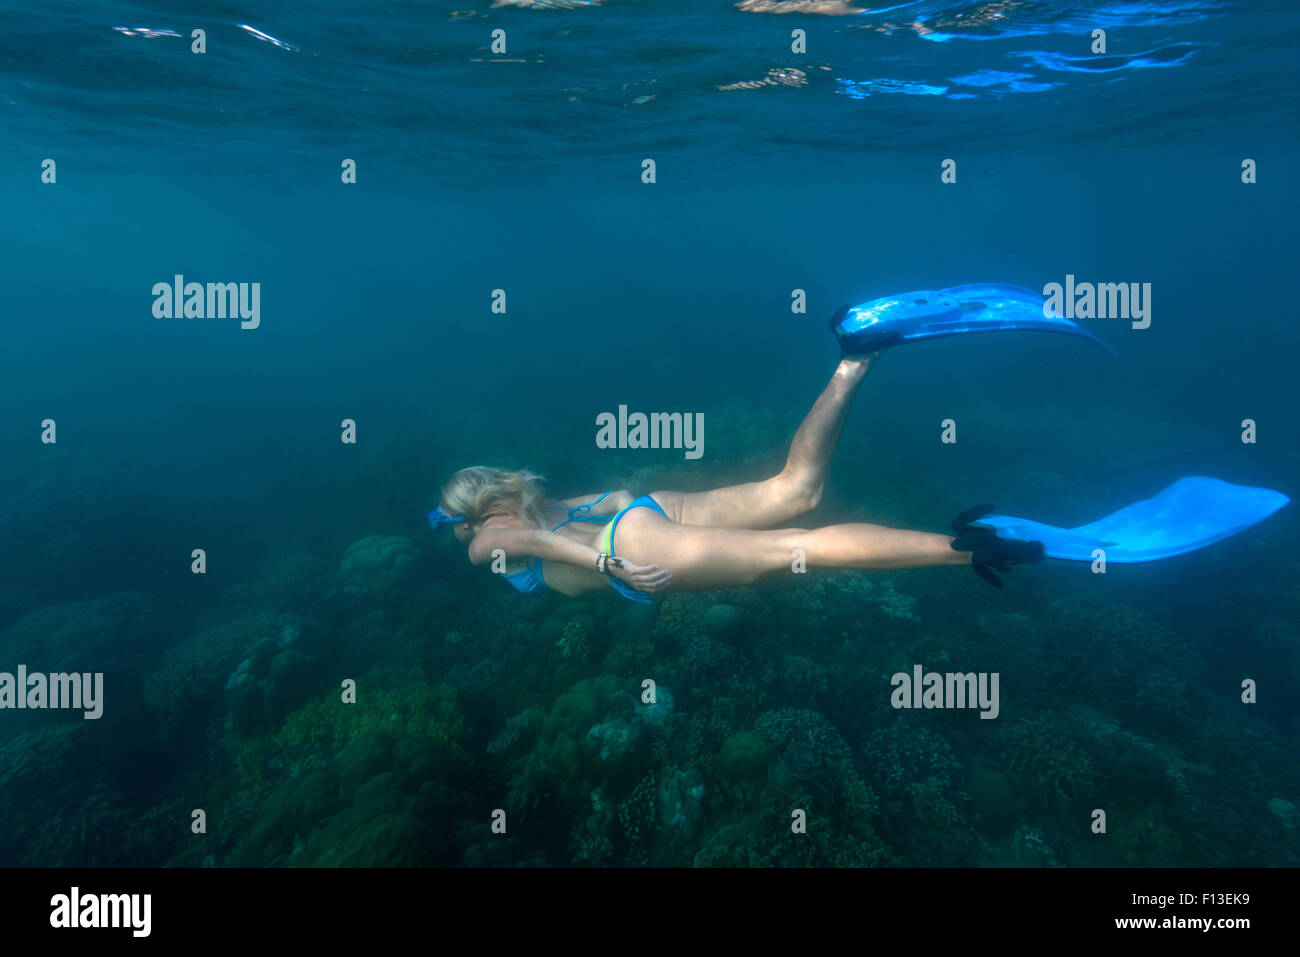 Woman snorkeling underwater, Bali, Indonesia Stock Photo